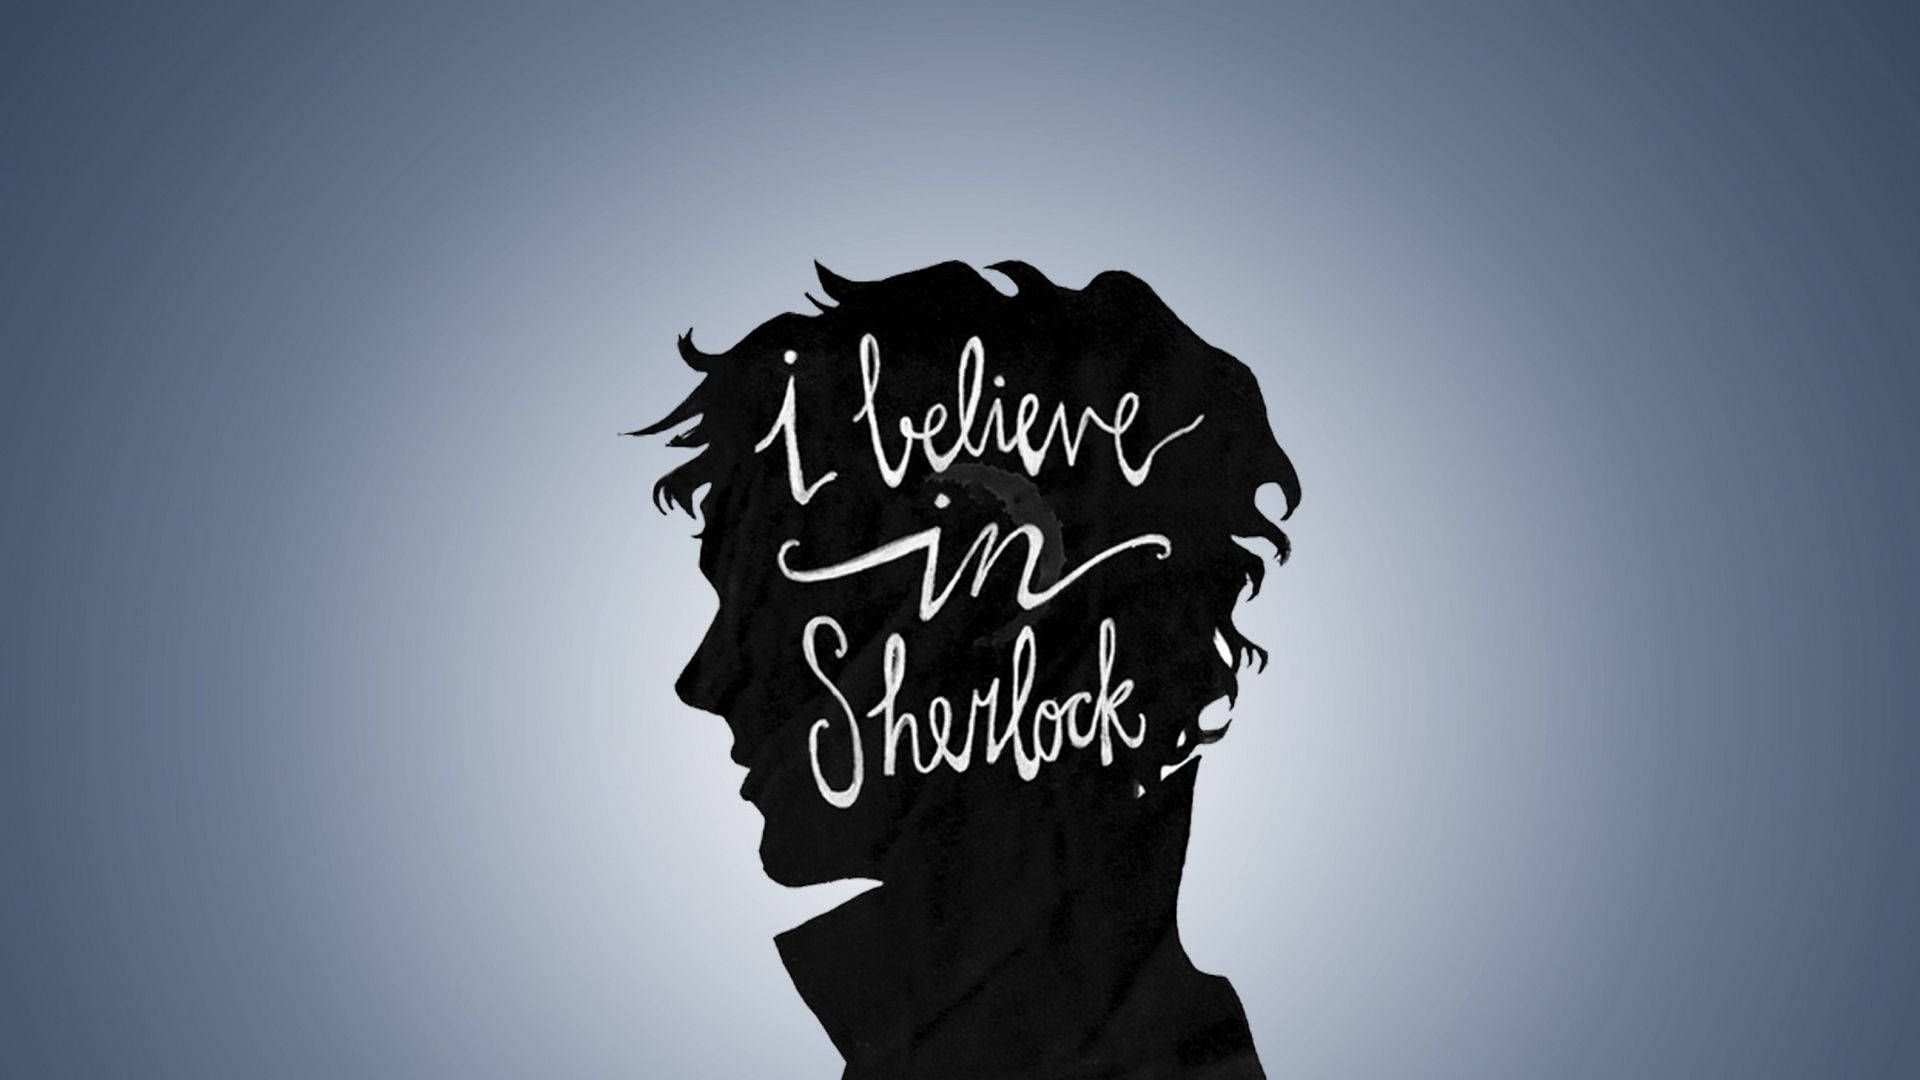 Free Sherlock Holmes Wallpaper Downloads, [100+] Sherlock Holmes Wallpapers  for FREE 